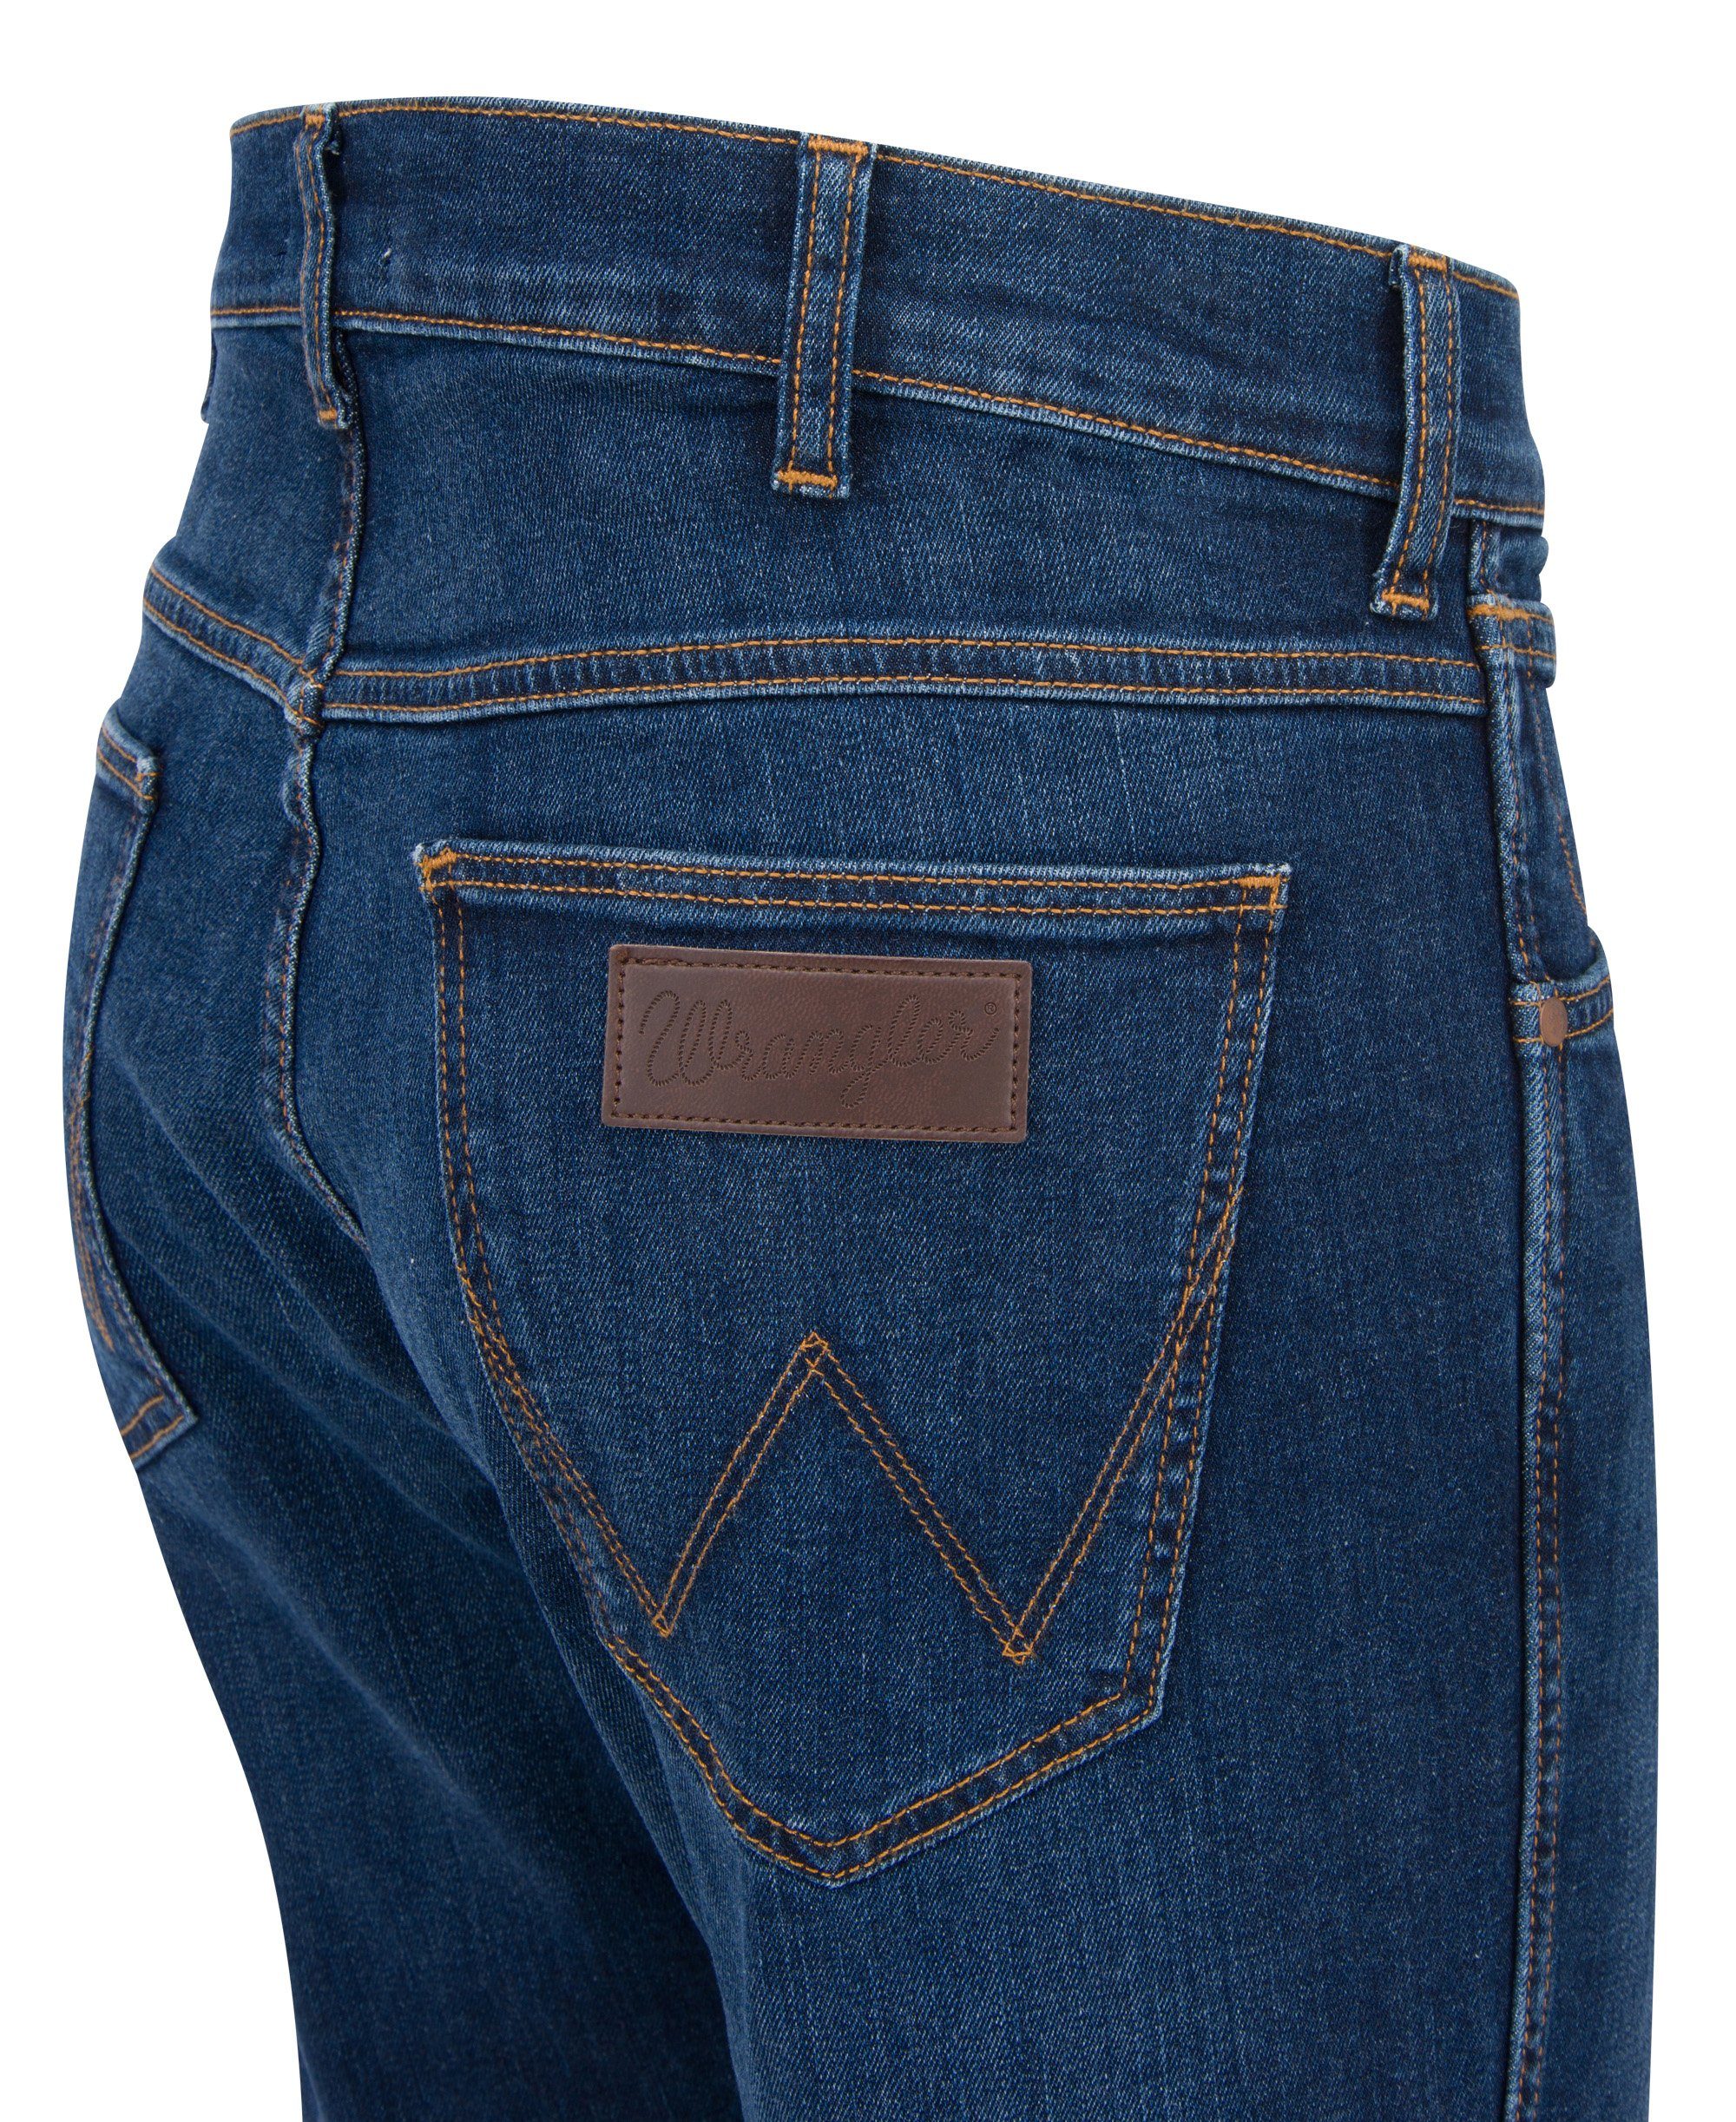 Wrangler 5-Pocket-Jeans WRANGLER GREENSBORO dark storm W15QLP36N